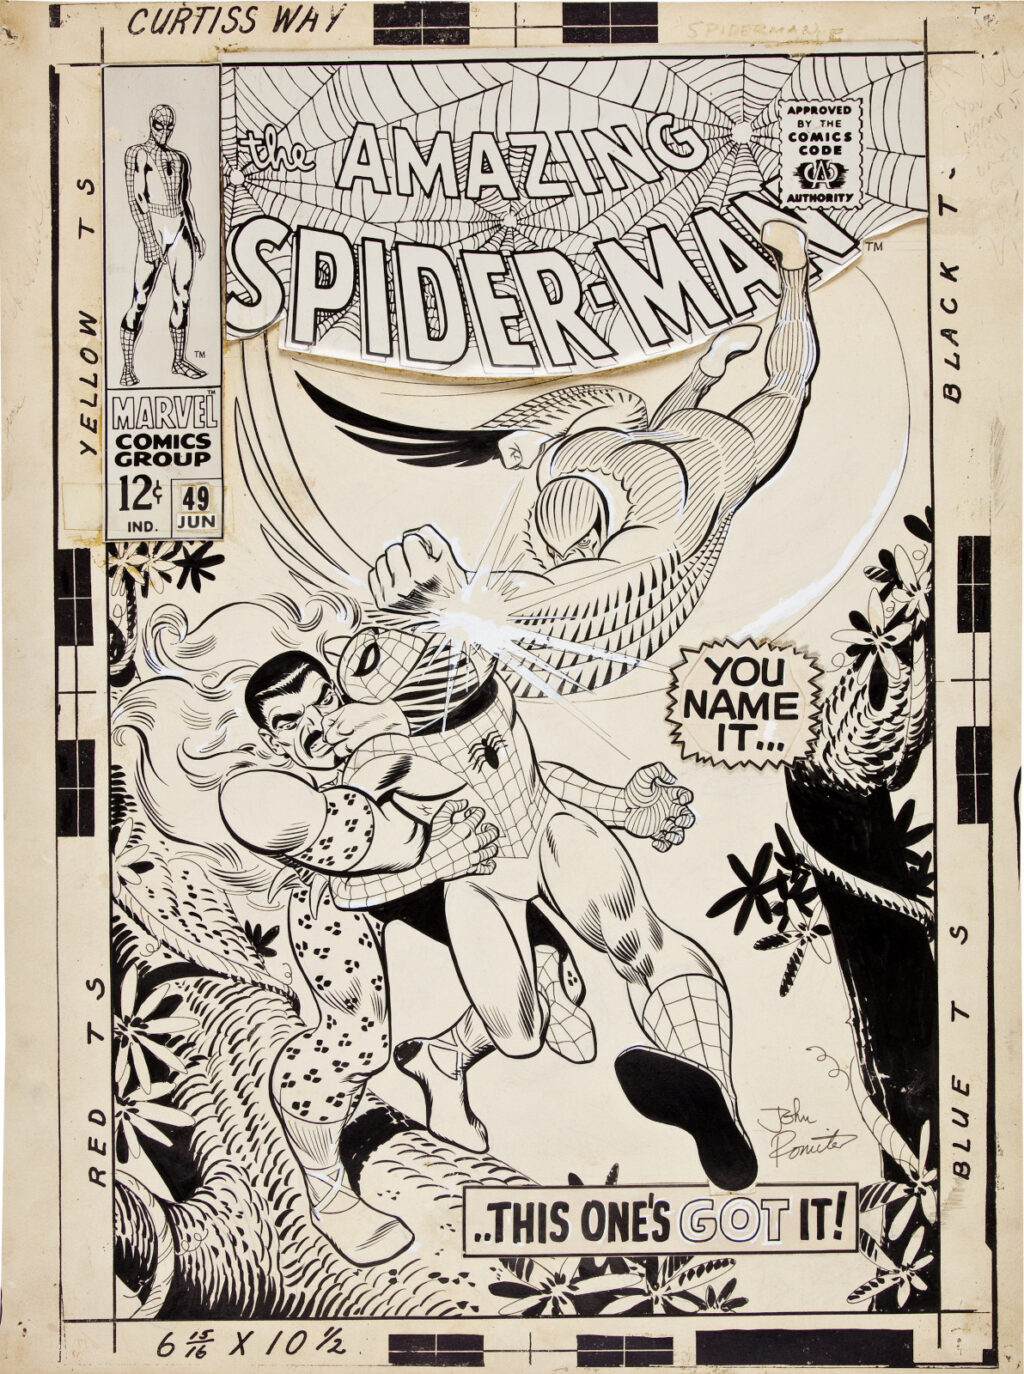 Amazing Spider Man issue 49 by John Romita